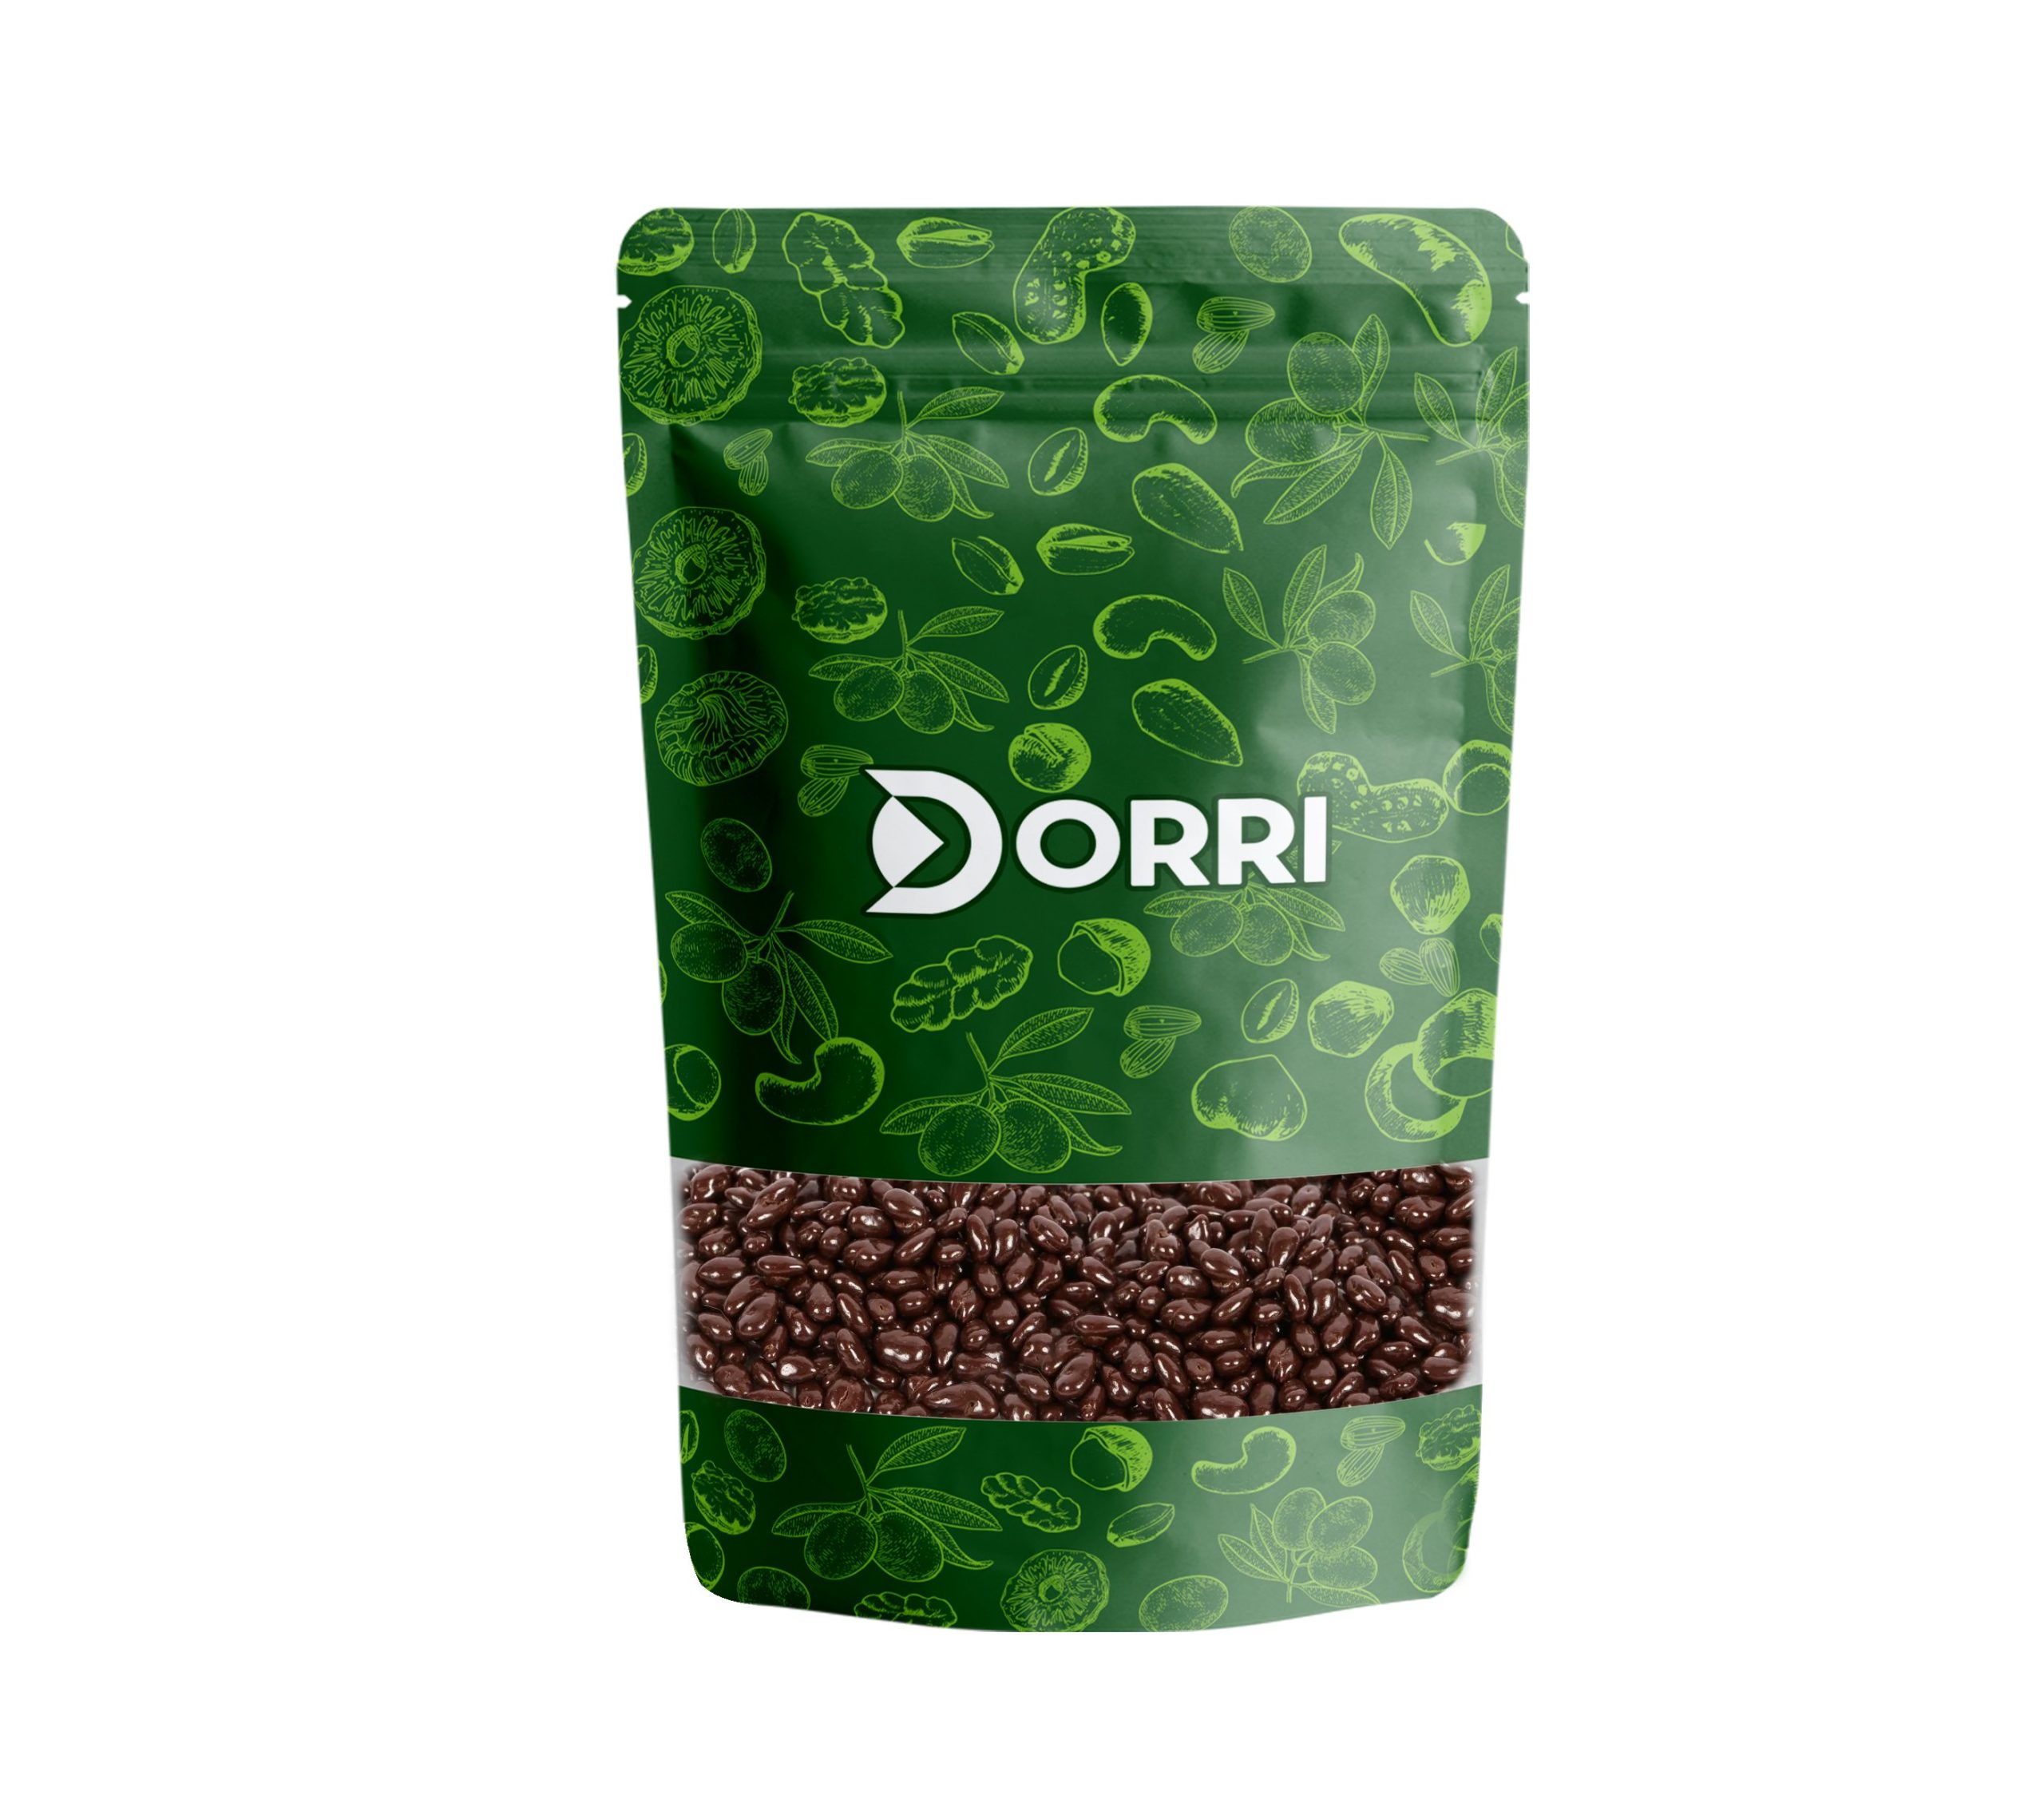 Dorri - Dark Chocolate Covered Sunflower Seeds